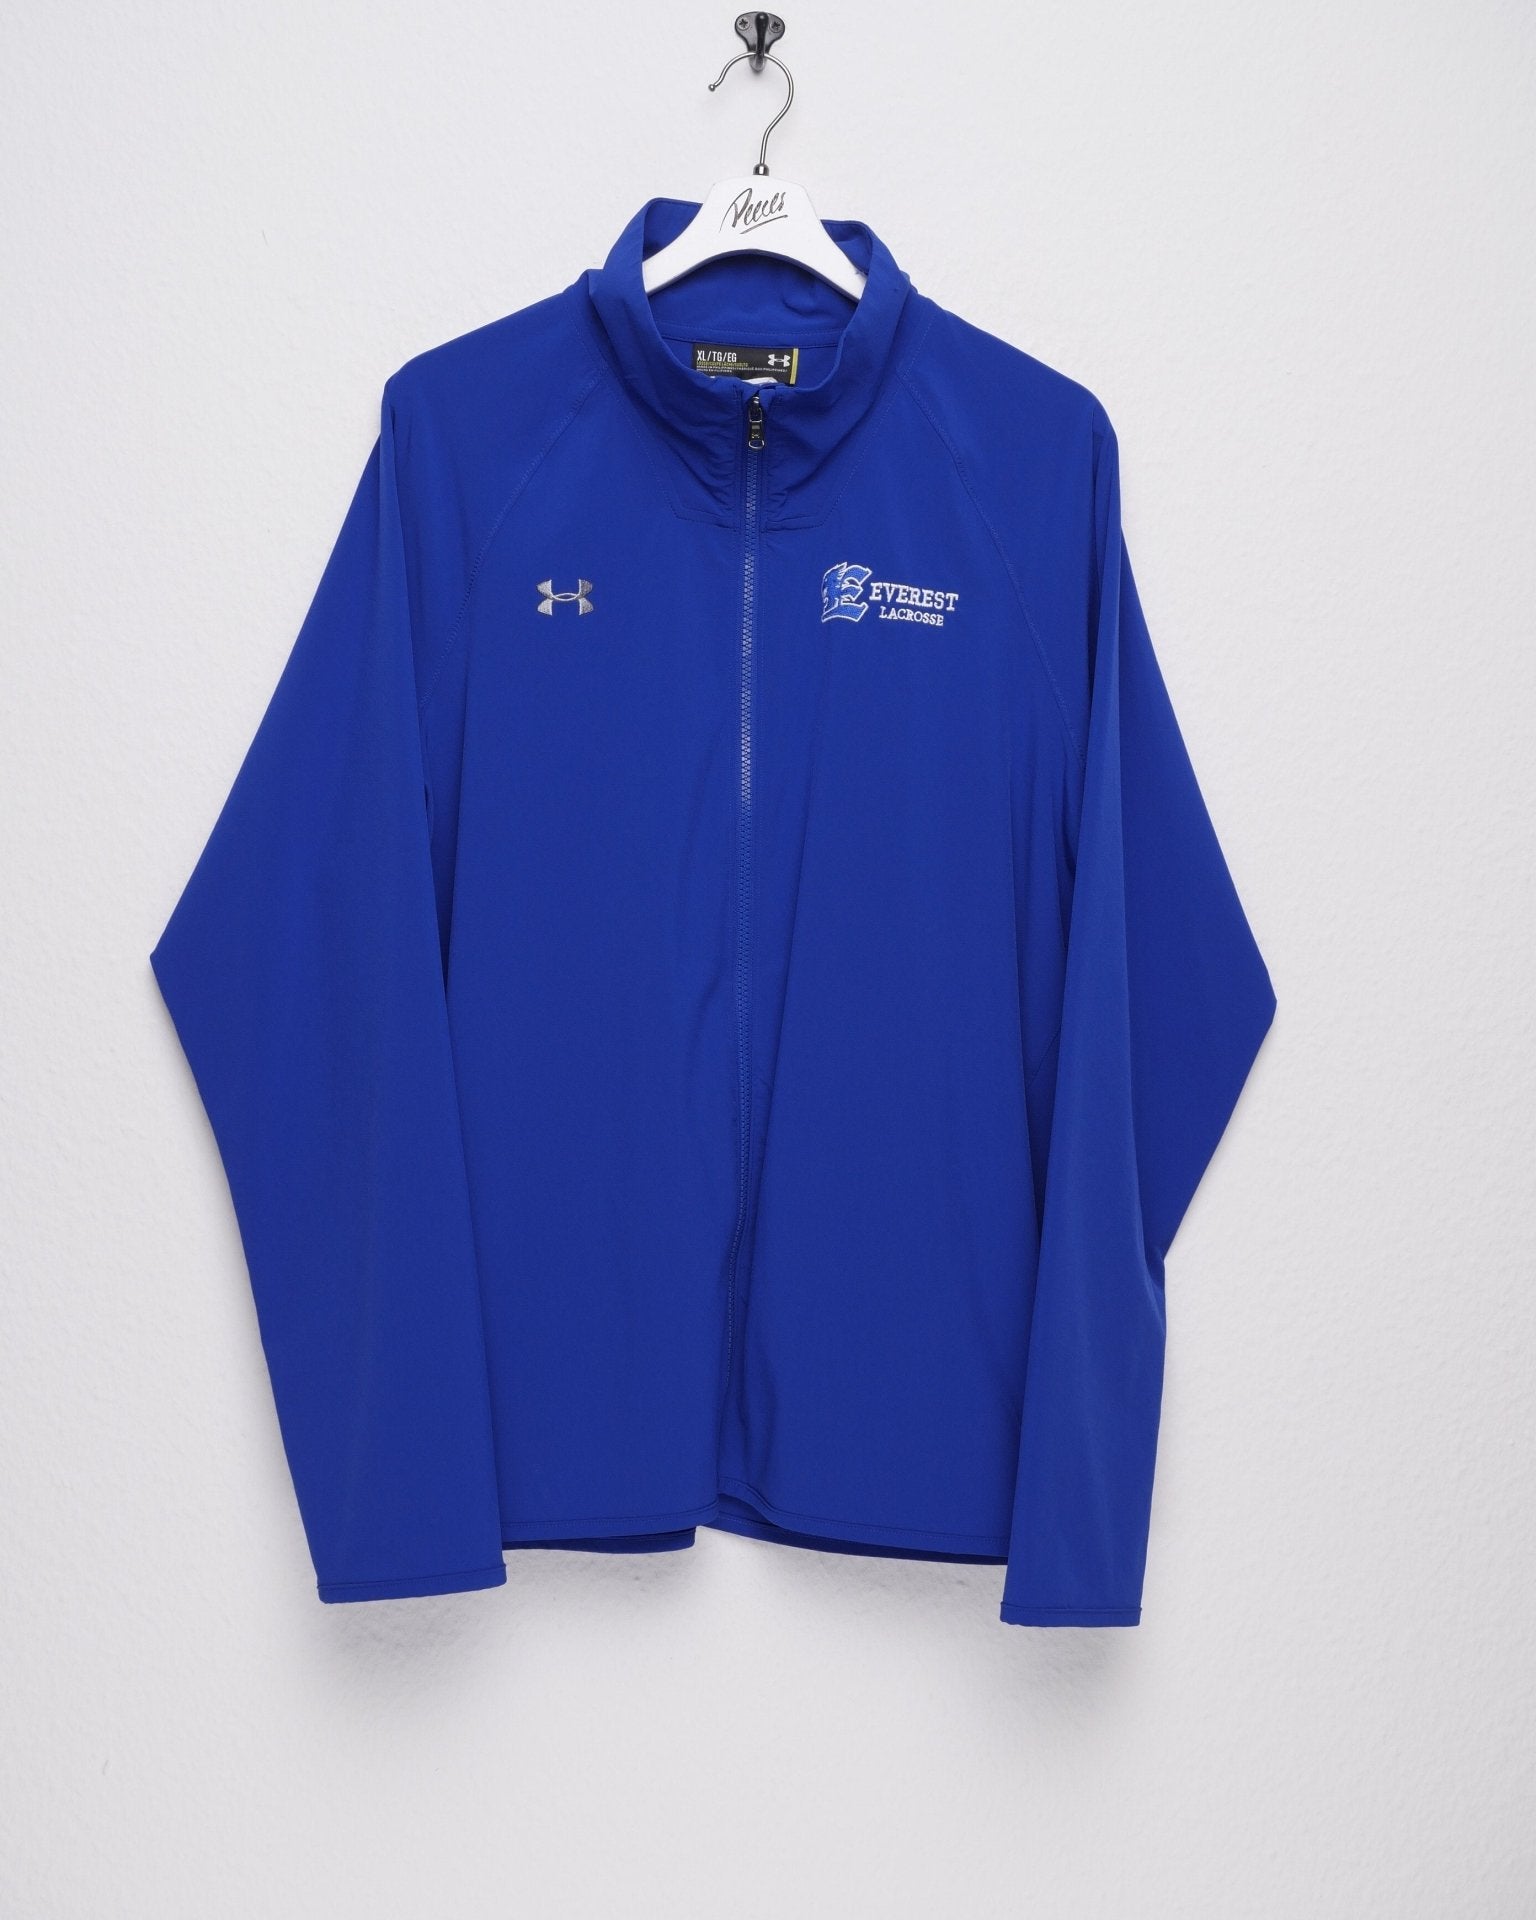 under amour Everest Lacrosse embroidered Logo blue Track Jacket - Peeces